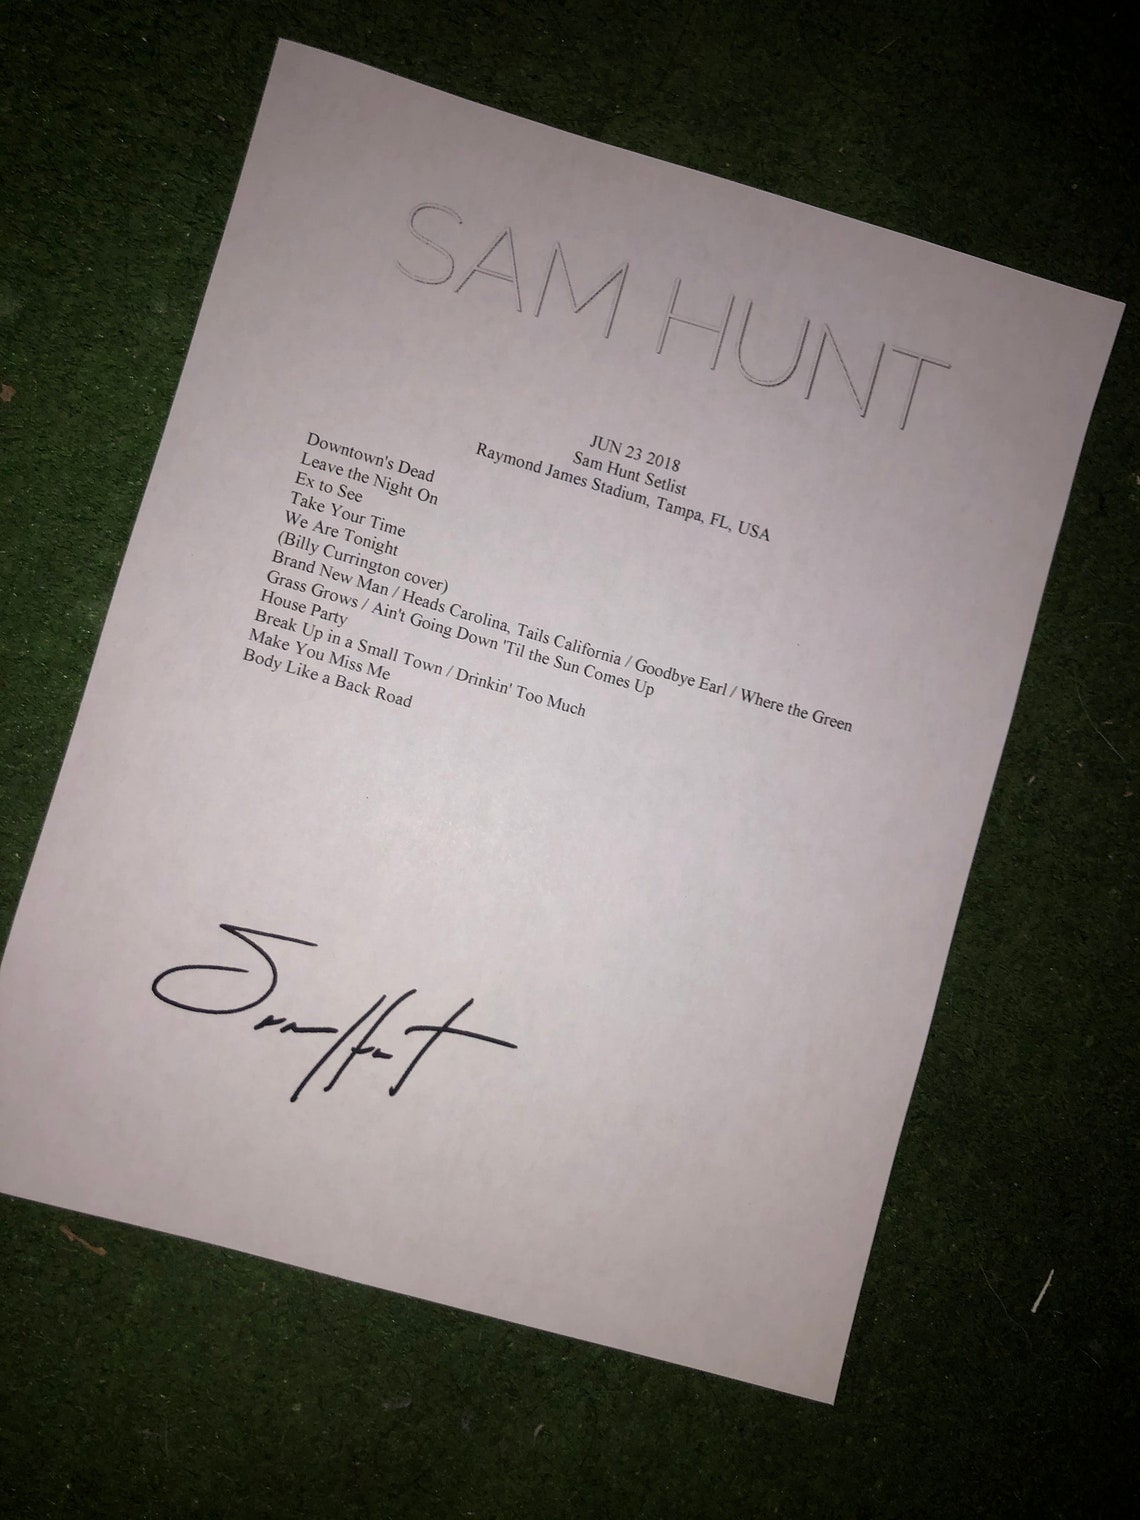 Sam Hunt Signed Setlist 2018 Reproduction Etsy